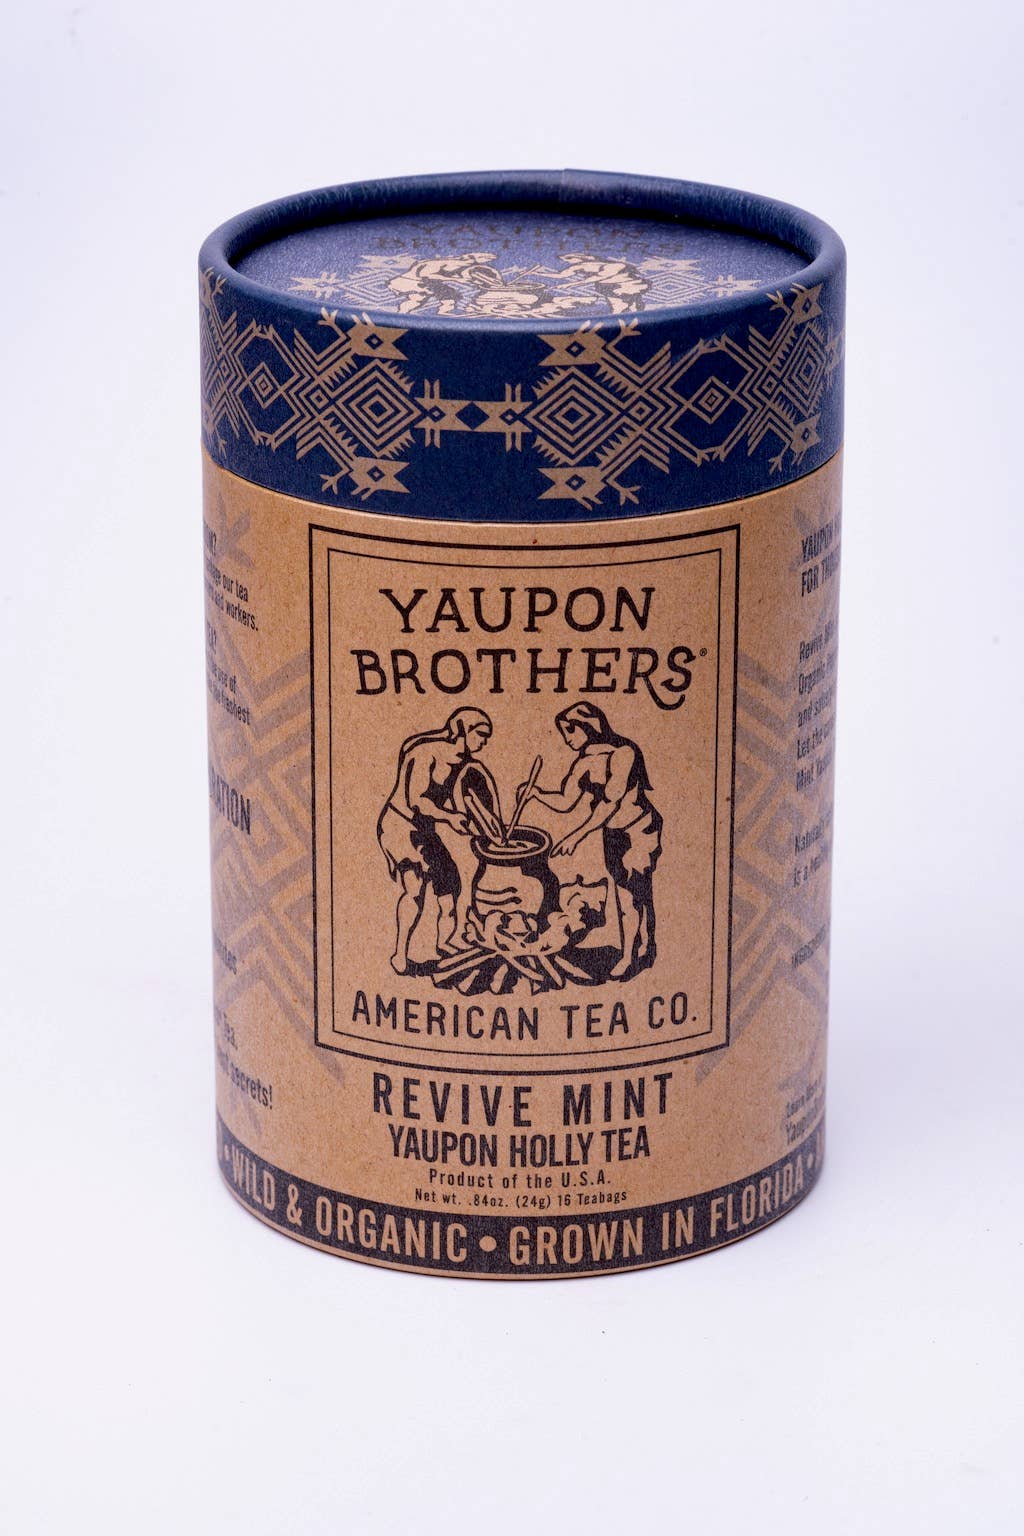 Yaupon Brothers American Tea Co. - Revive Mint Yaupon Holly Tea